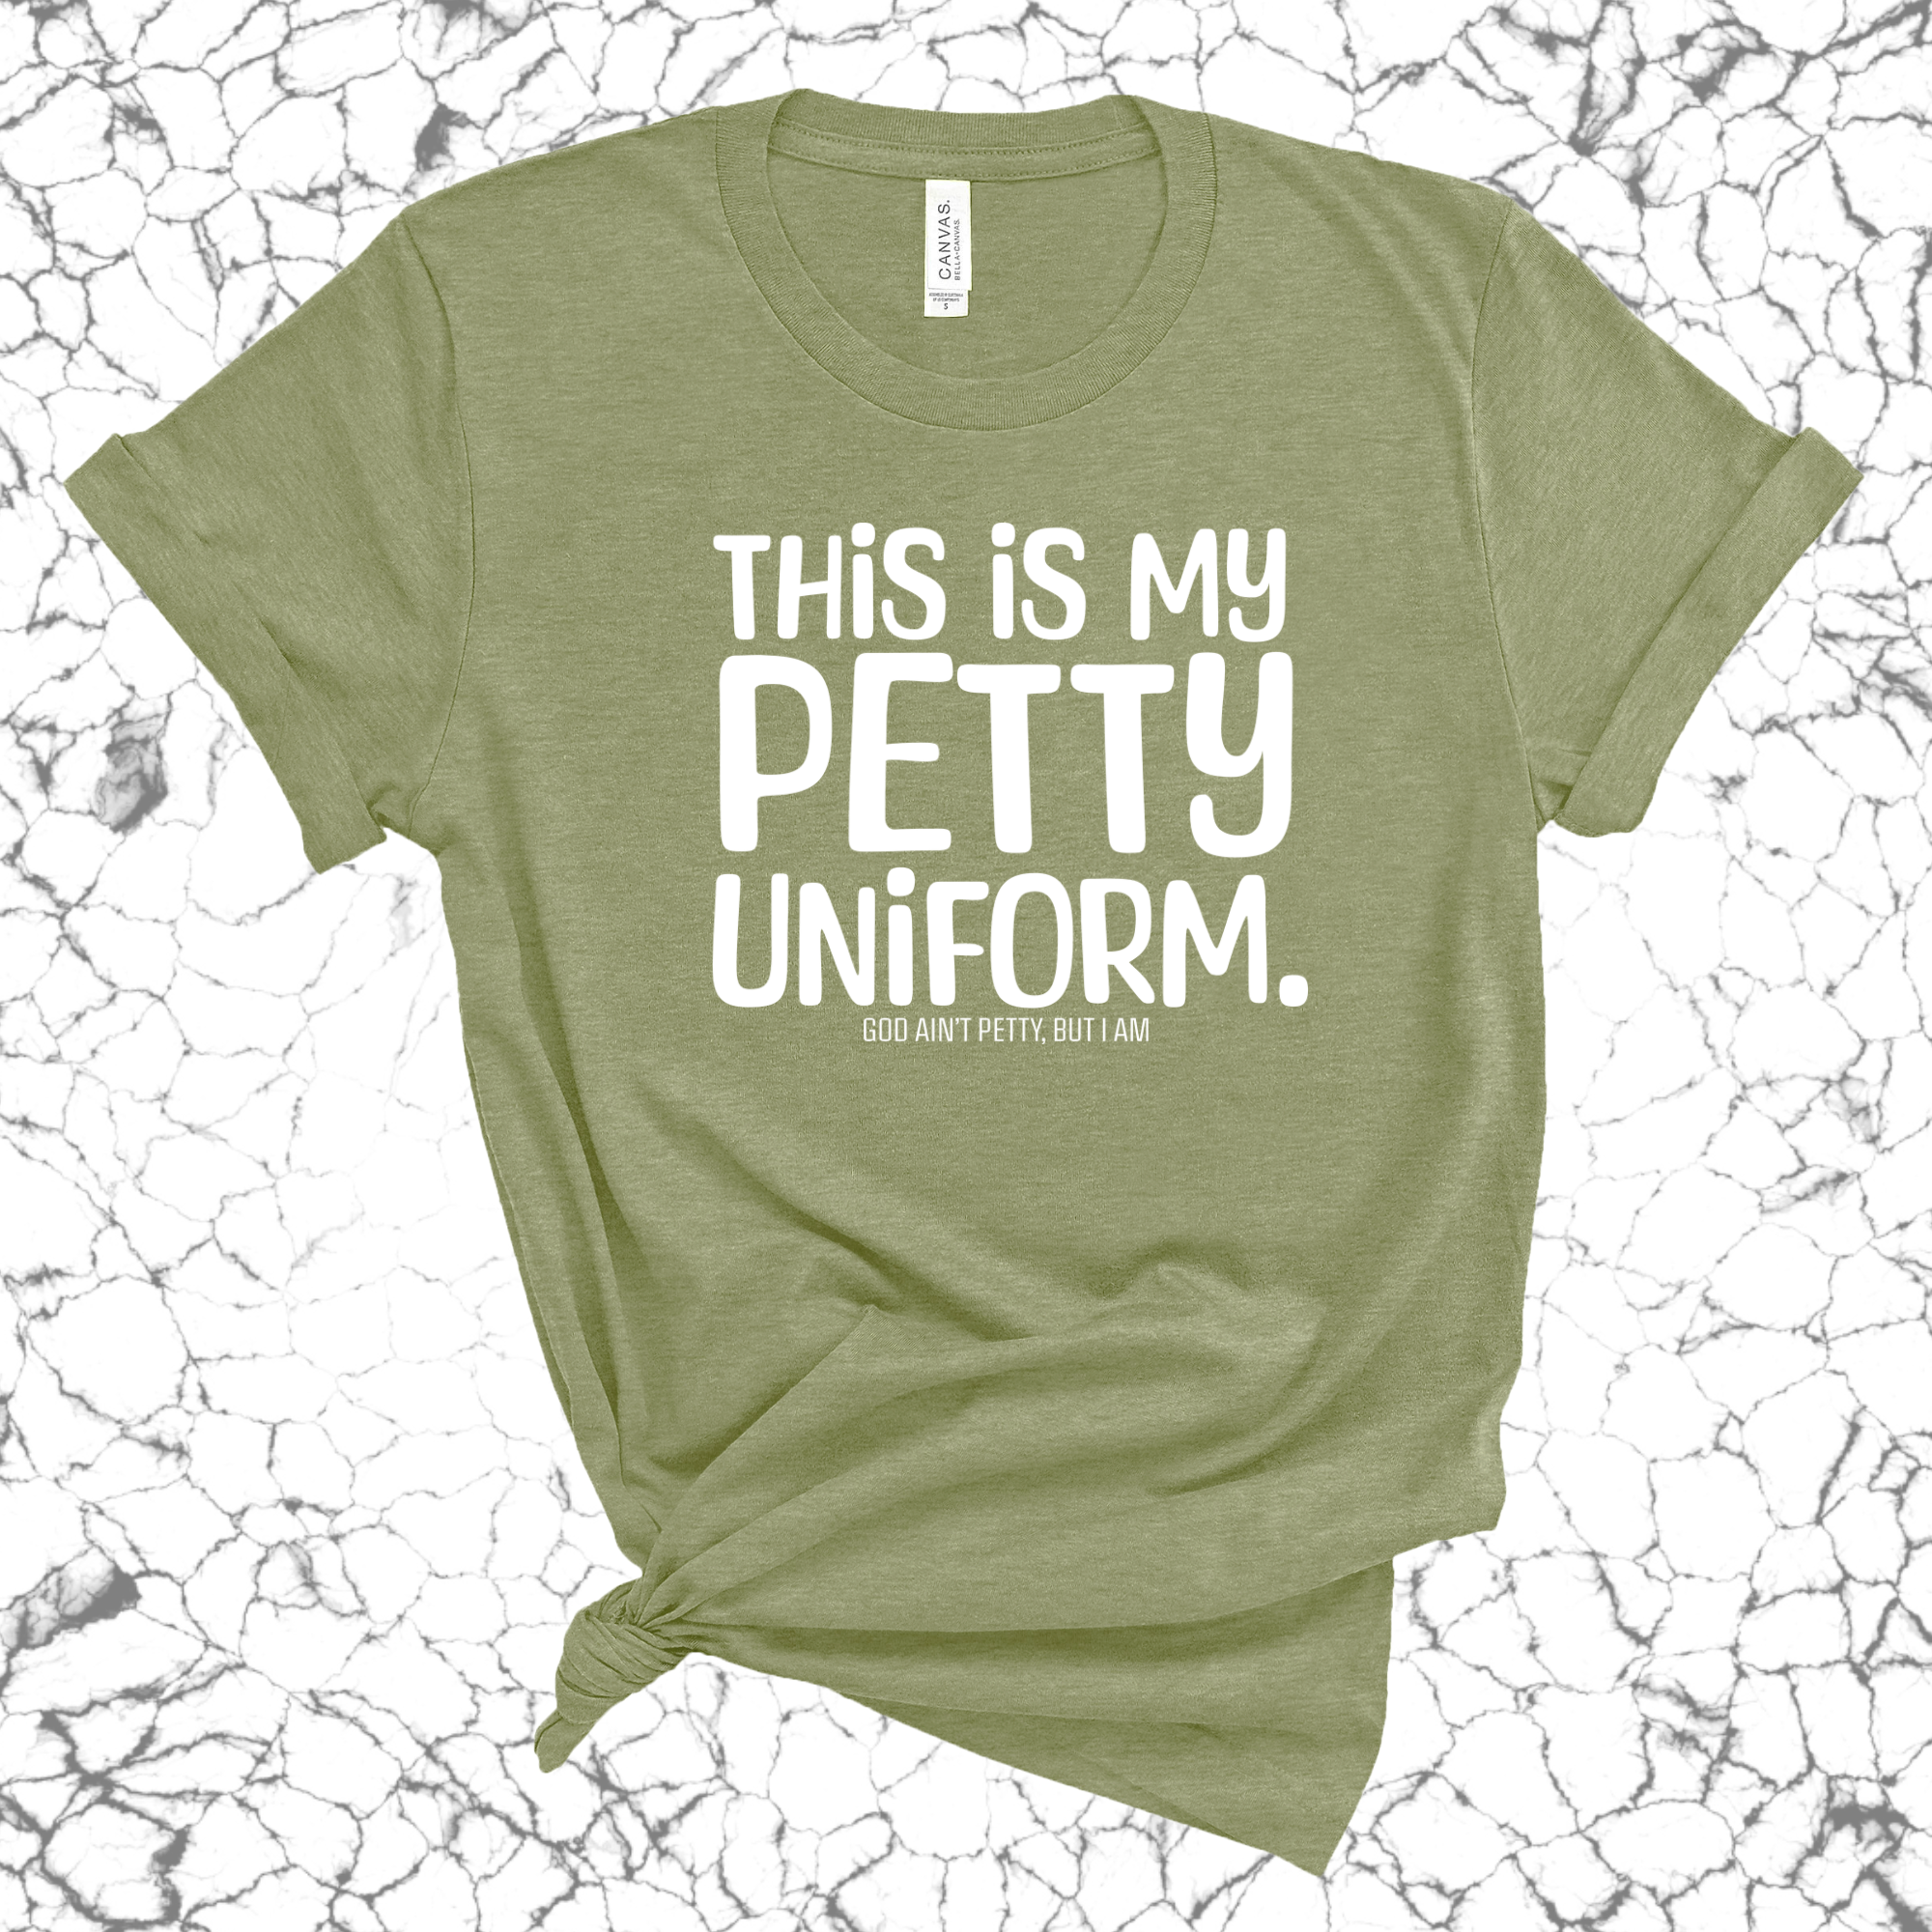 This is my Petty Uniform Unisex Tee-T-Shirt-The Original God Ain't Petty But I Am